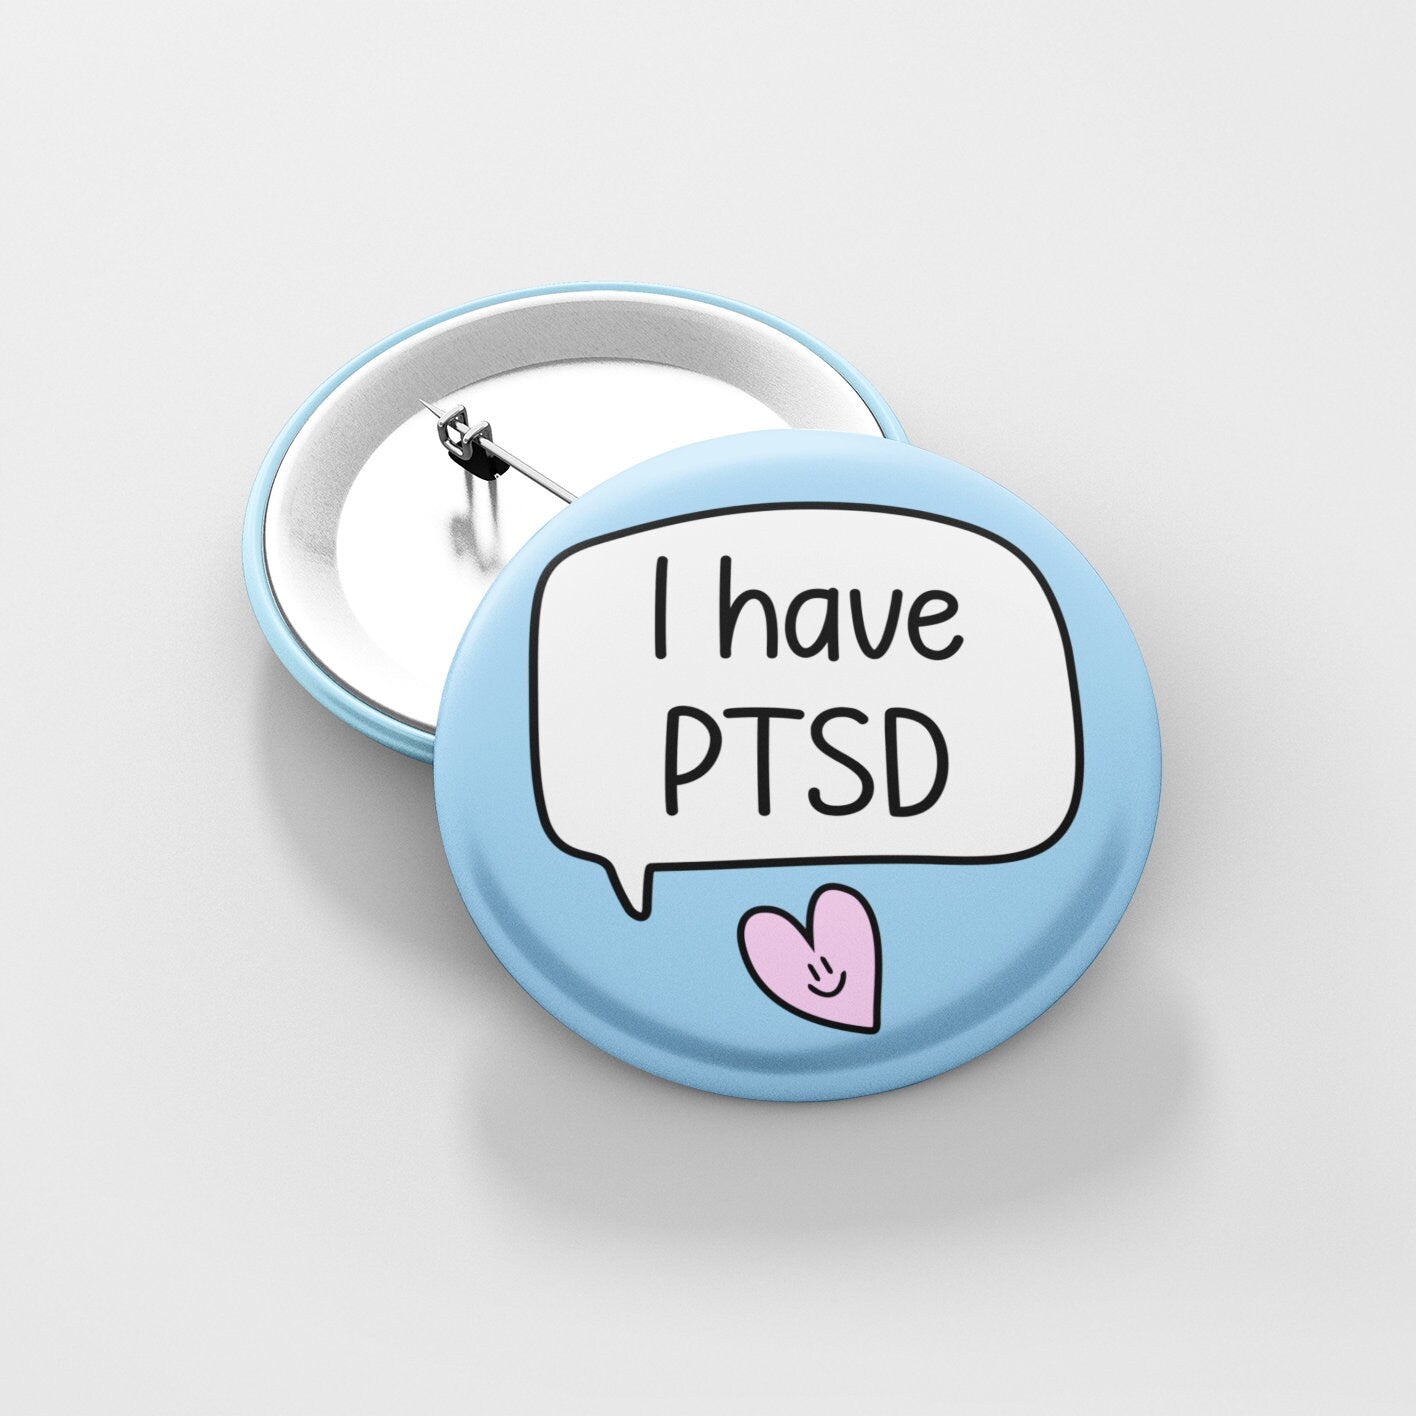 I have PTSD Badge Pin | PTSD Pins - Awareness